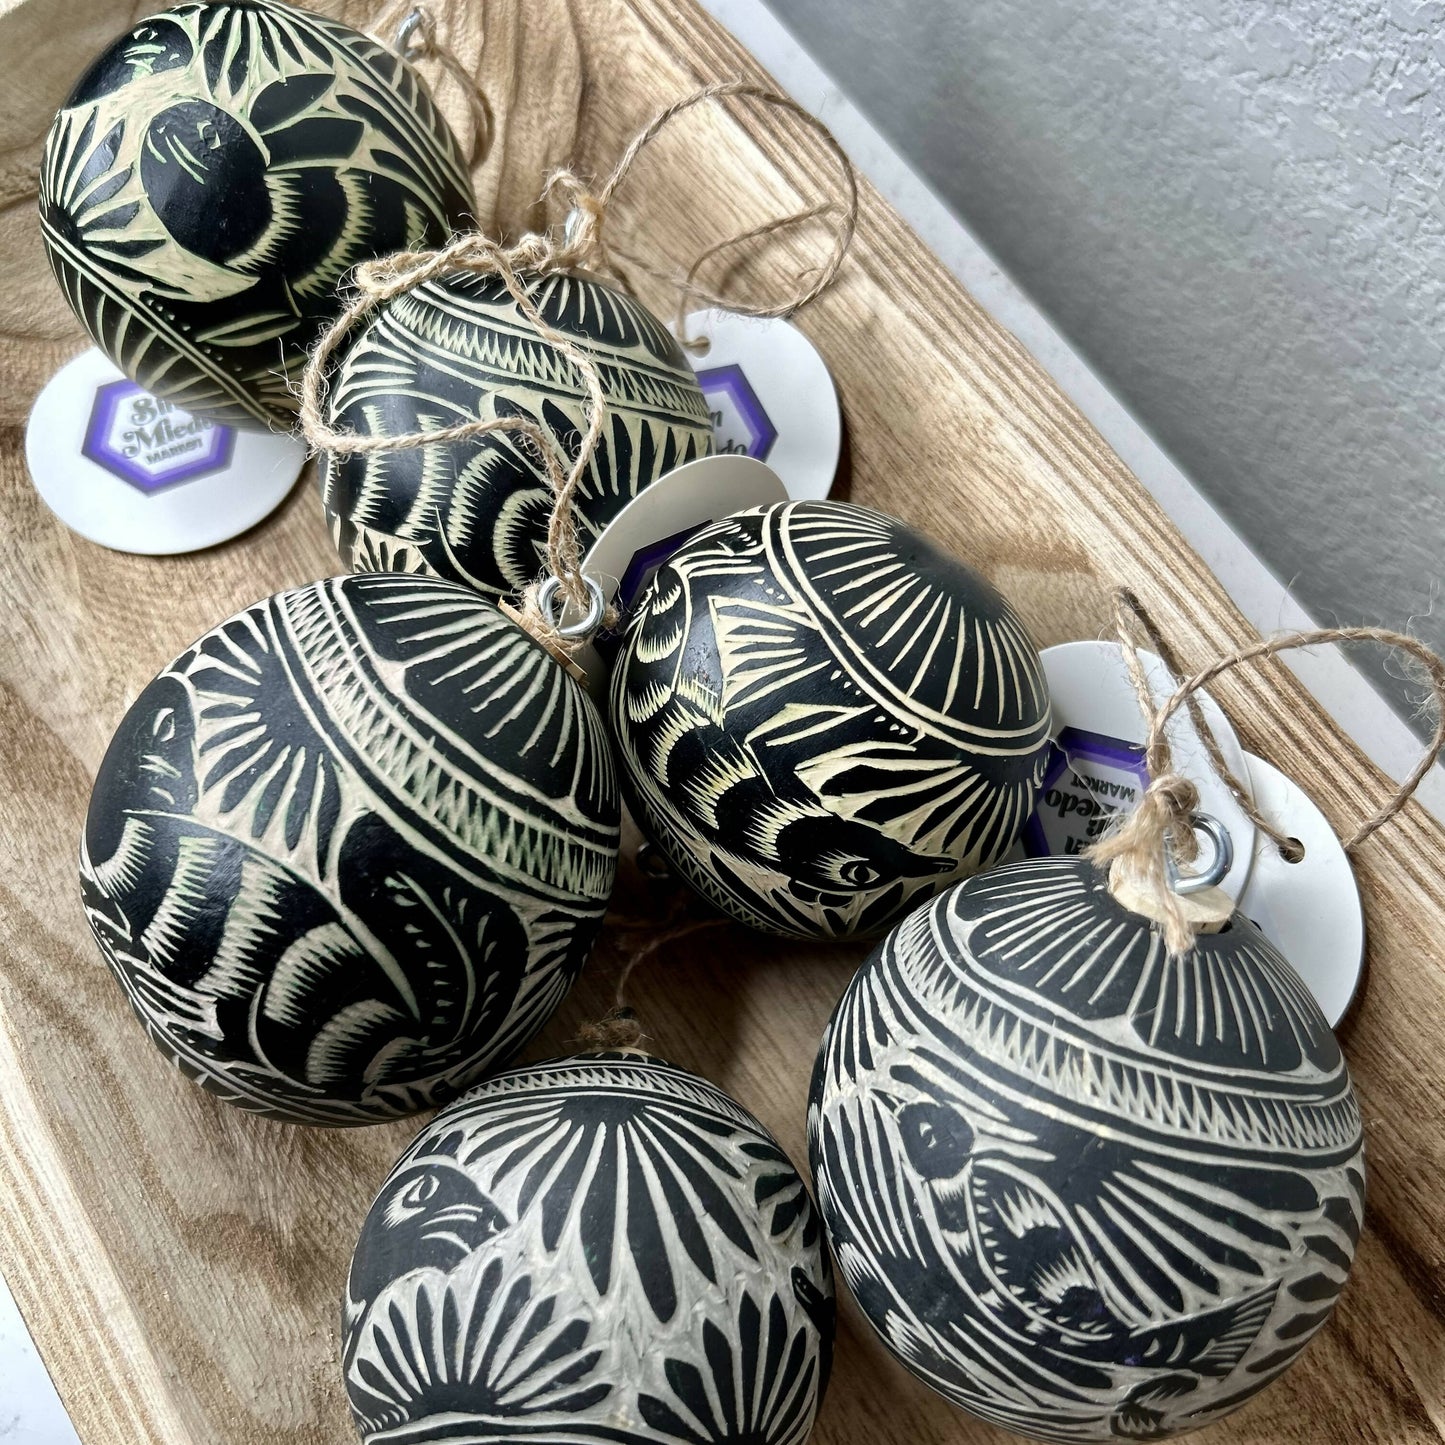 Oaxaca Jicara Ornament